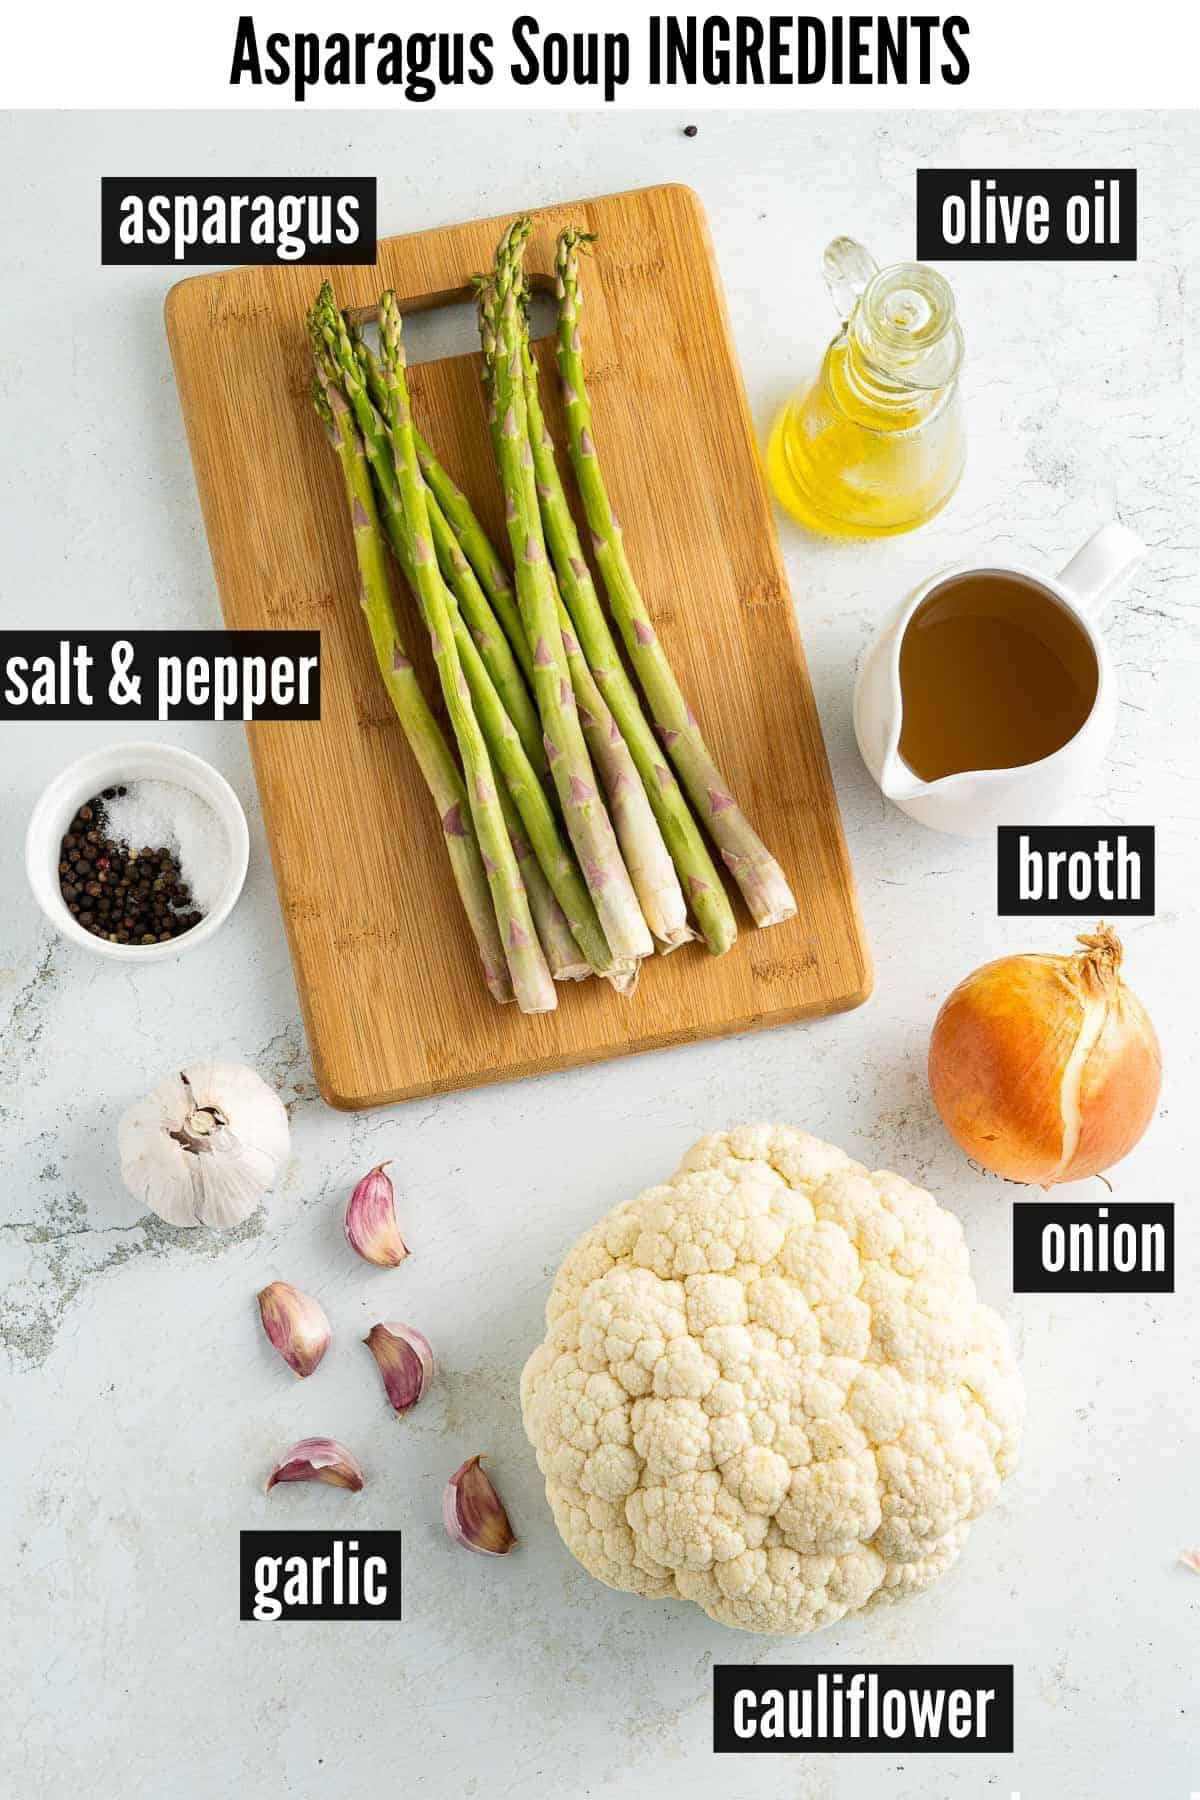 asparagus soup ingredients labelled